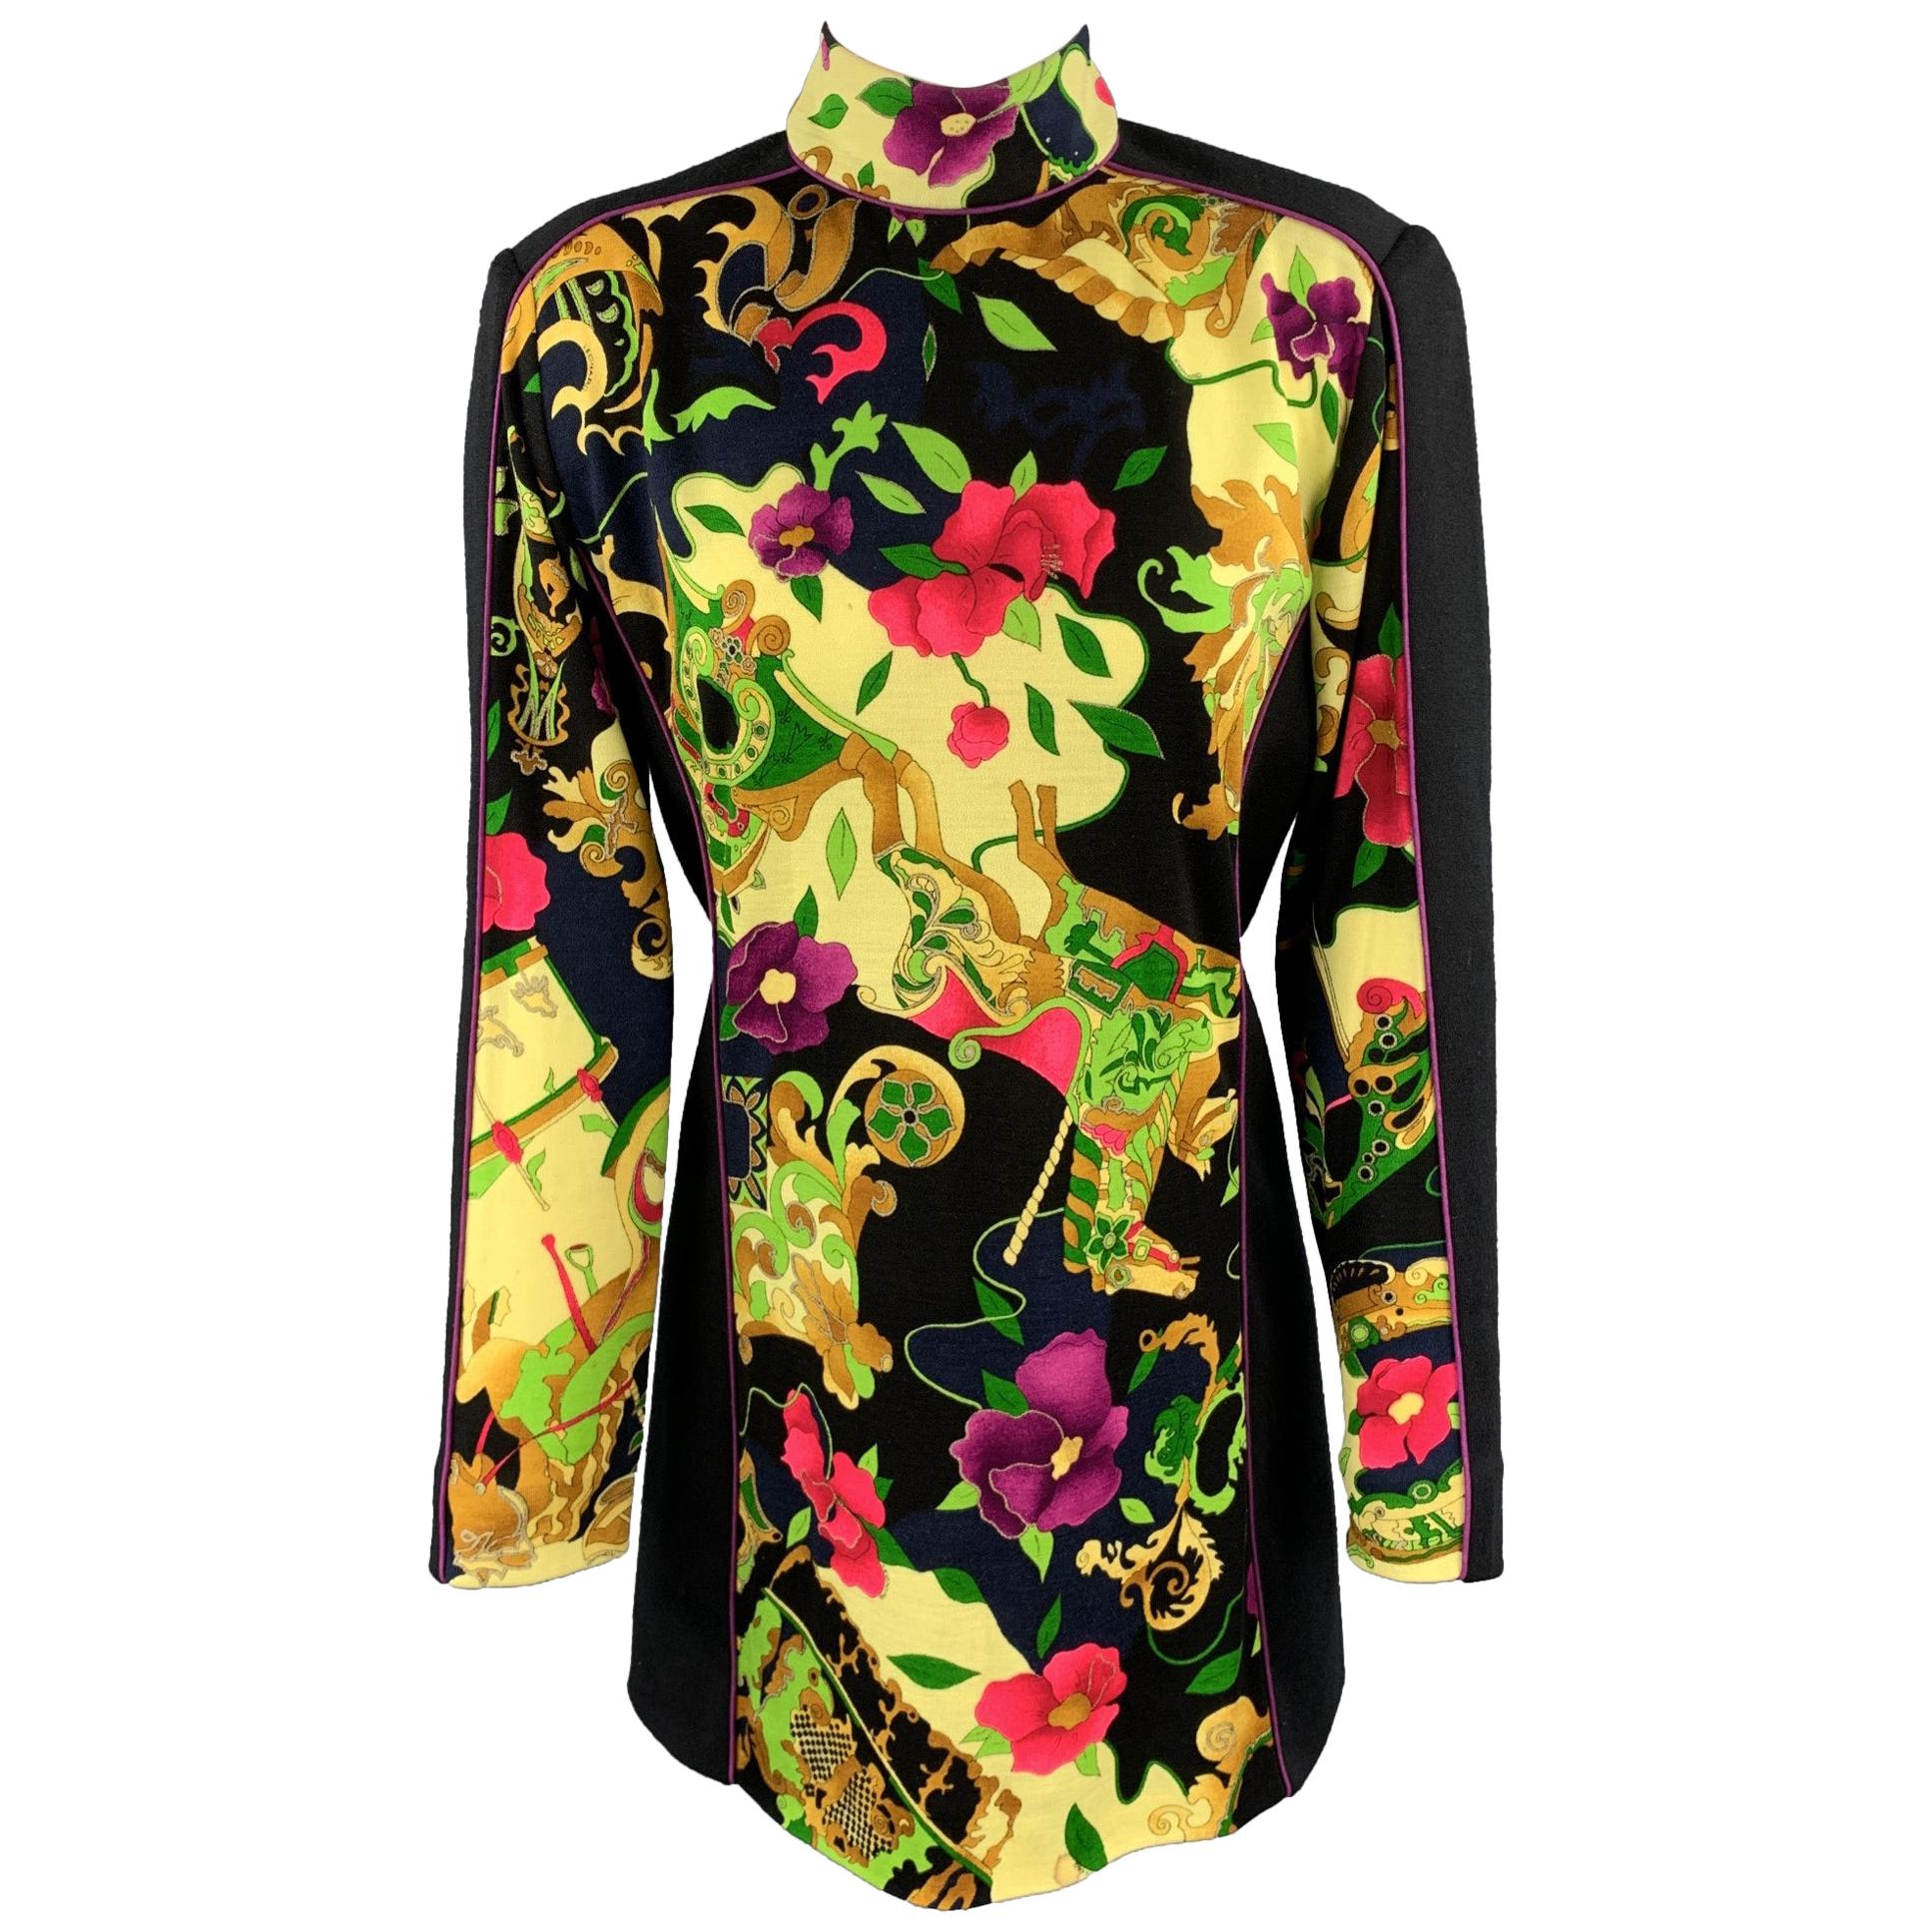 LEONARD PARIS Size 2 Black & Yellow Floral Print Wool Jersey Mock Neck Dress